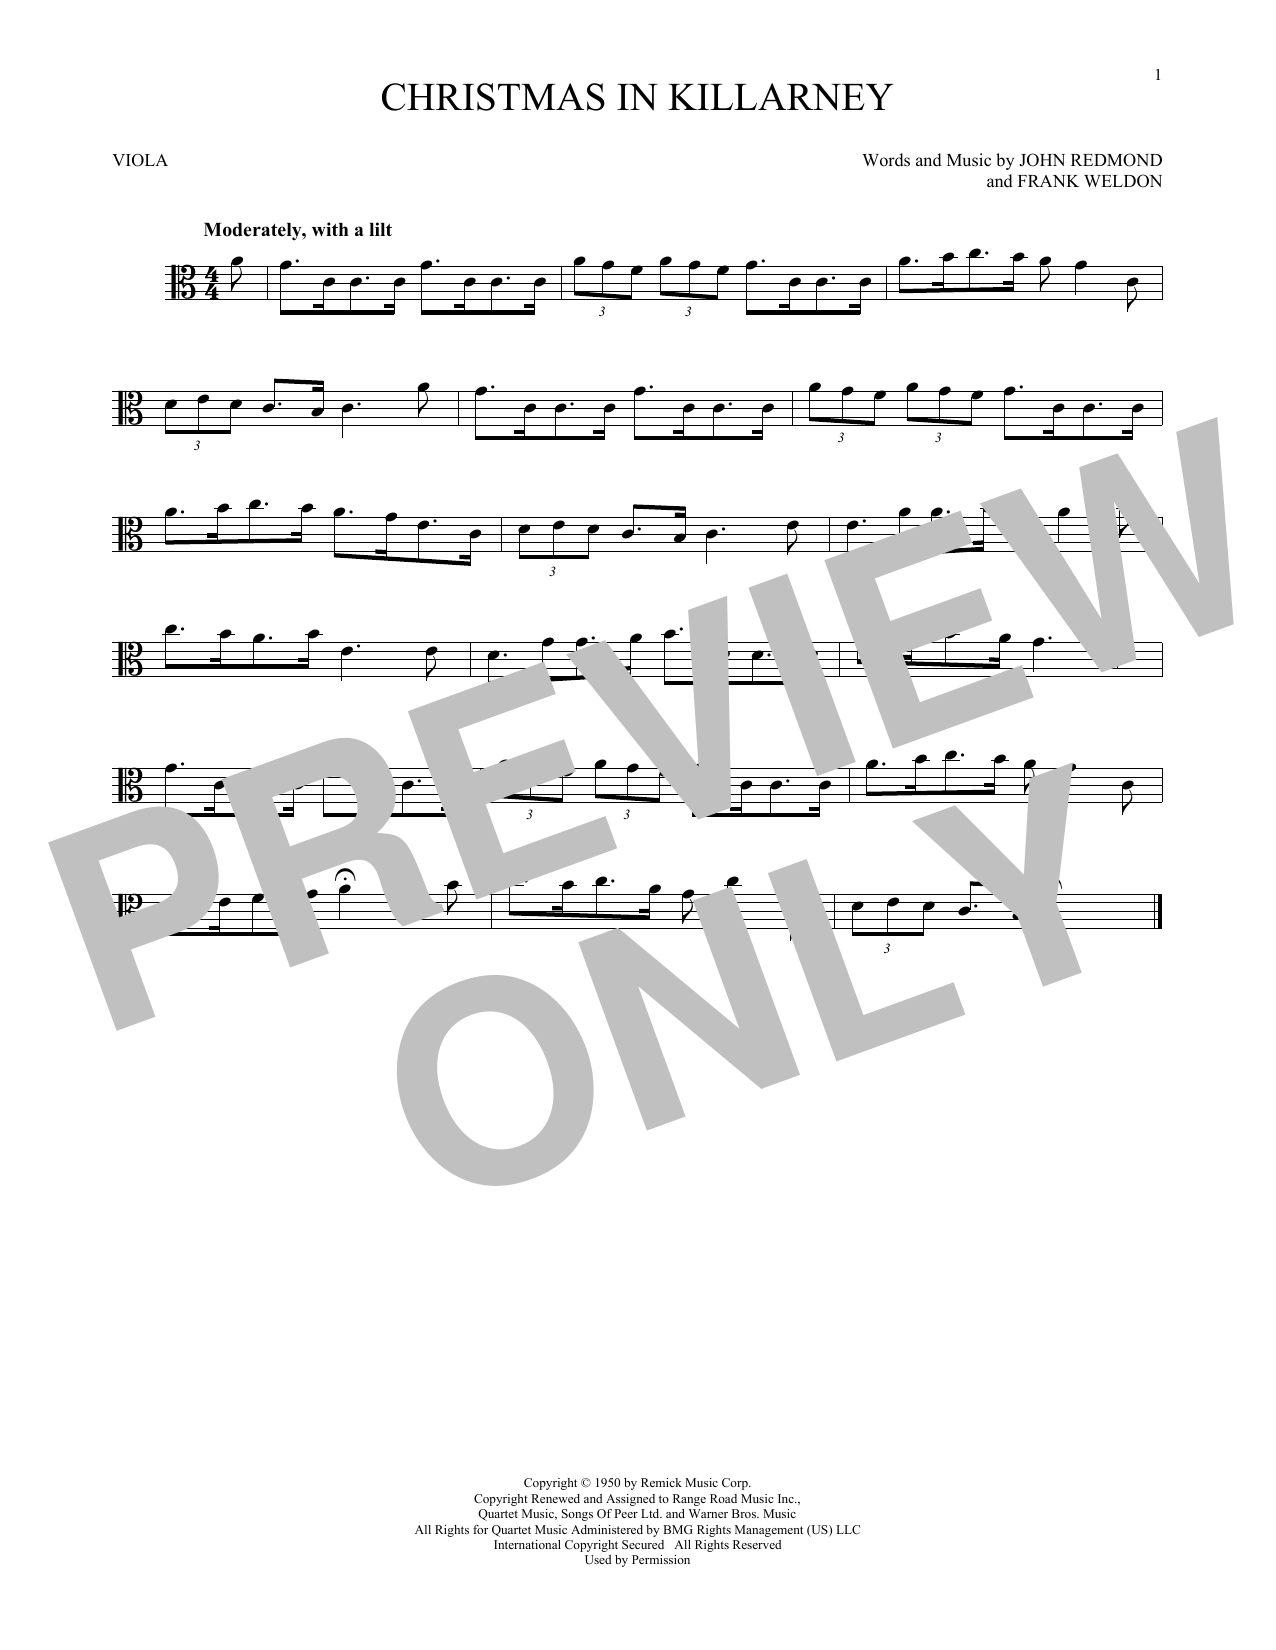 John Redmond & Frank Weldon Christmas In Killarney Sheet Music Notes & Chords for Flute Solo - Download or Print PDF